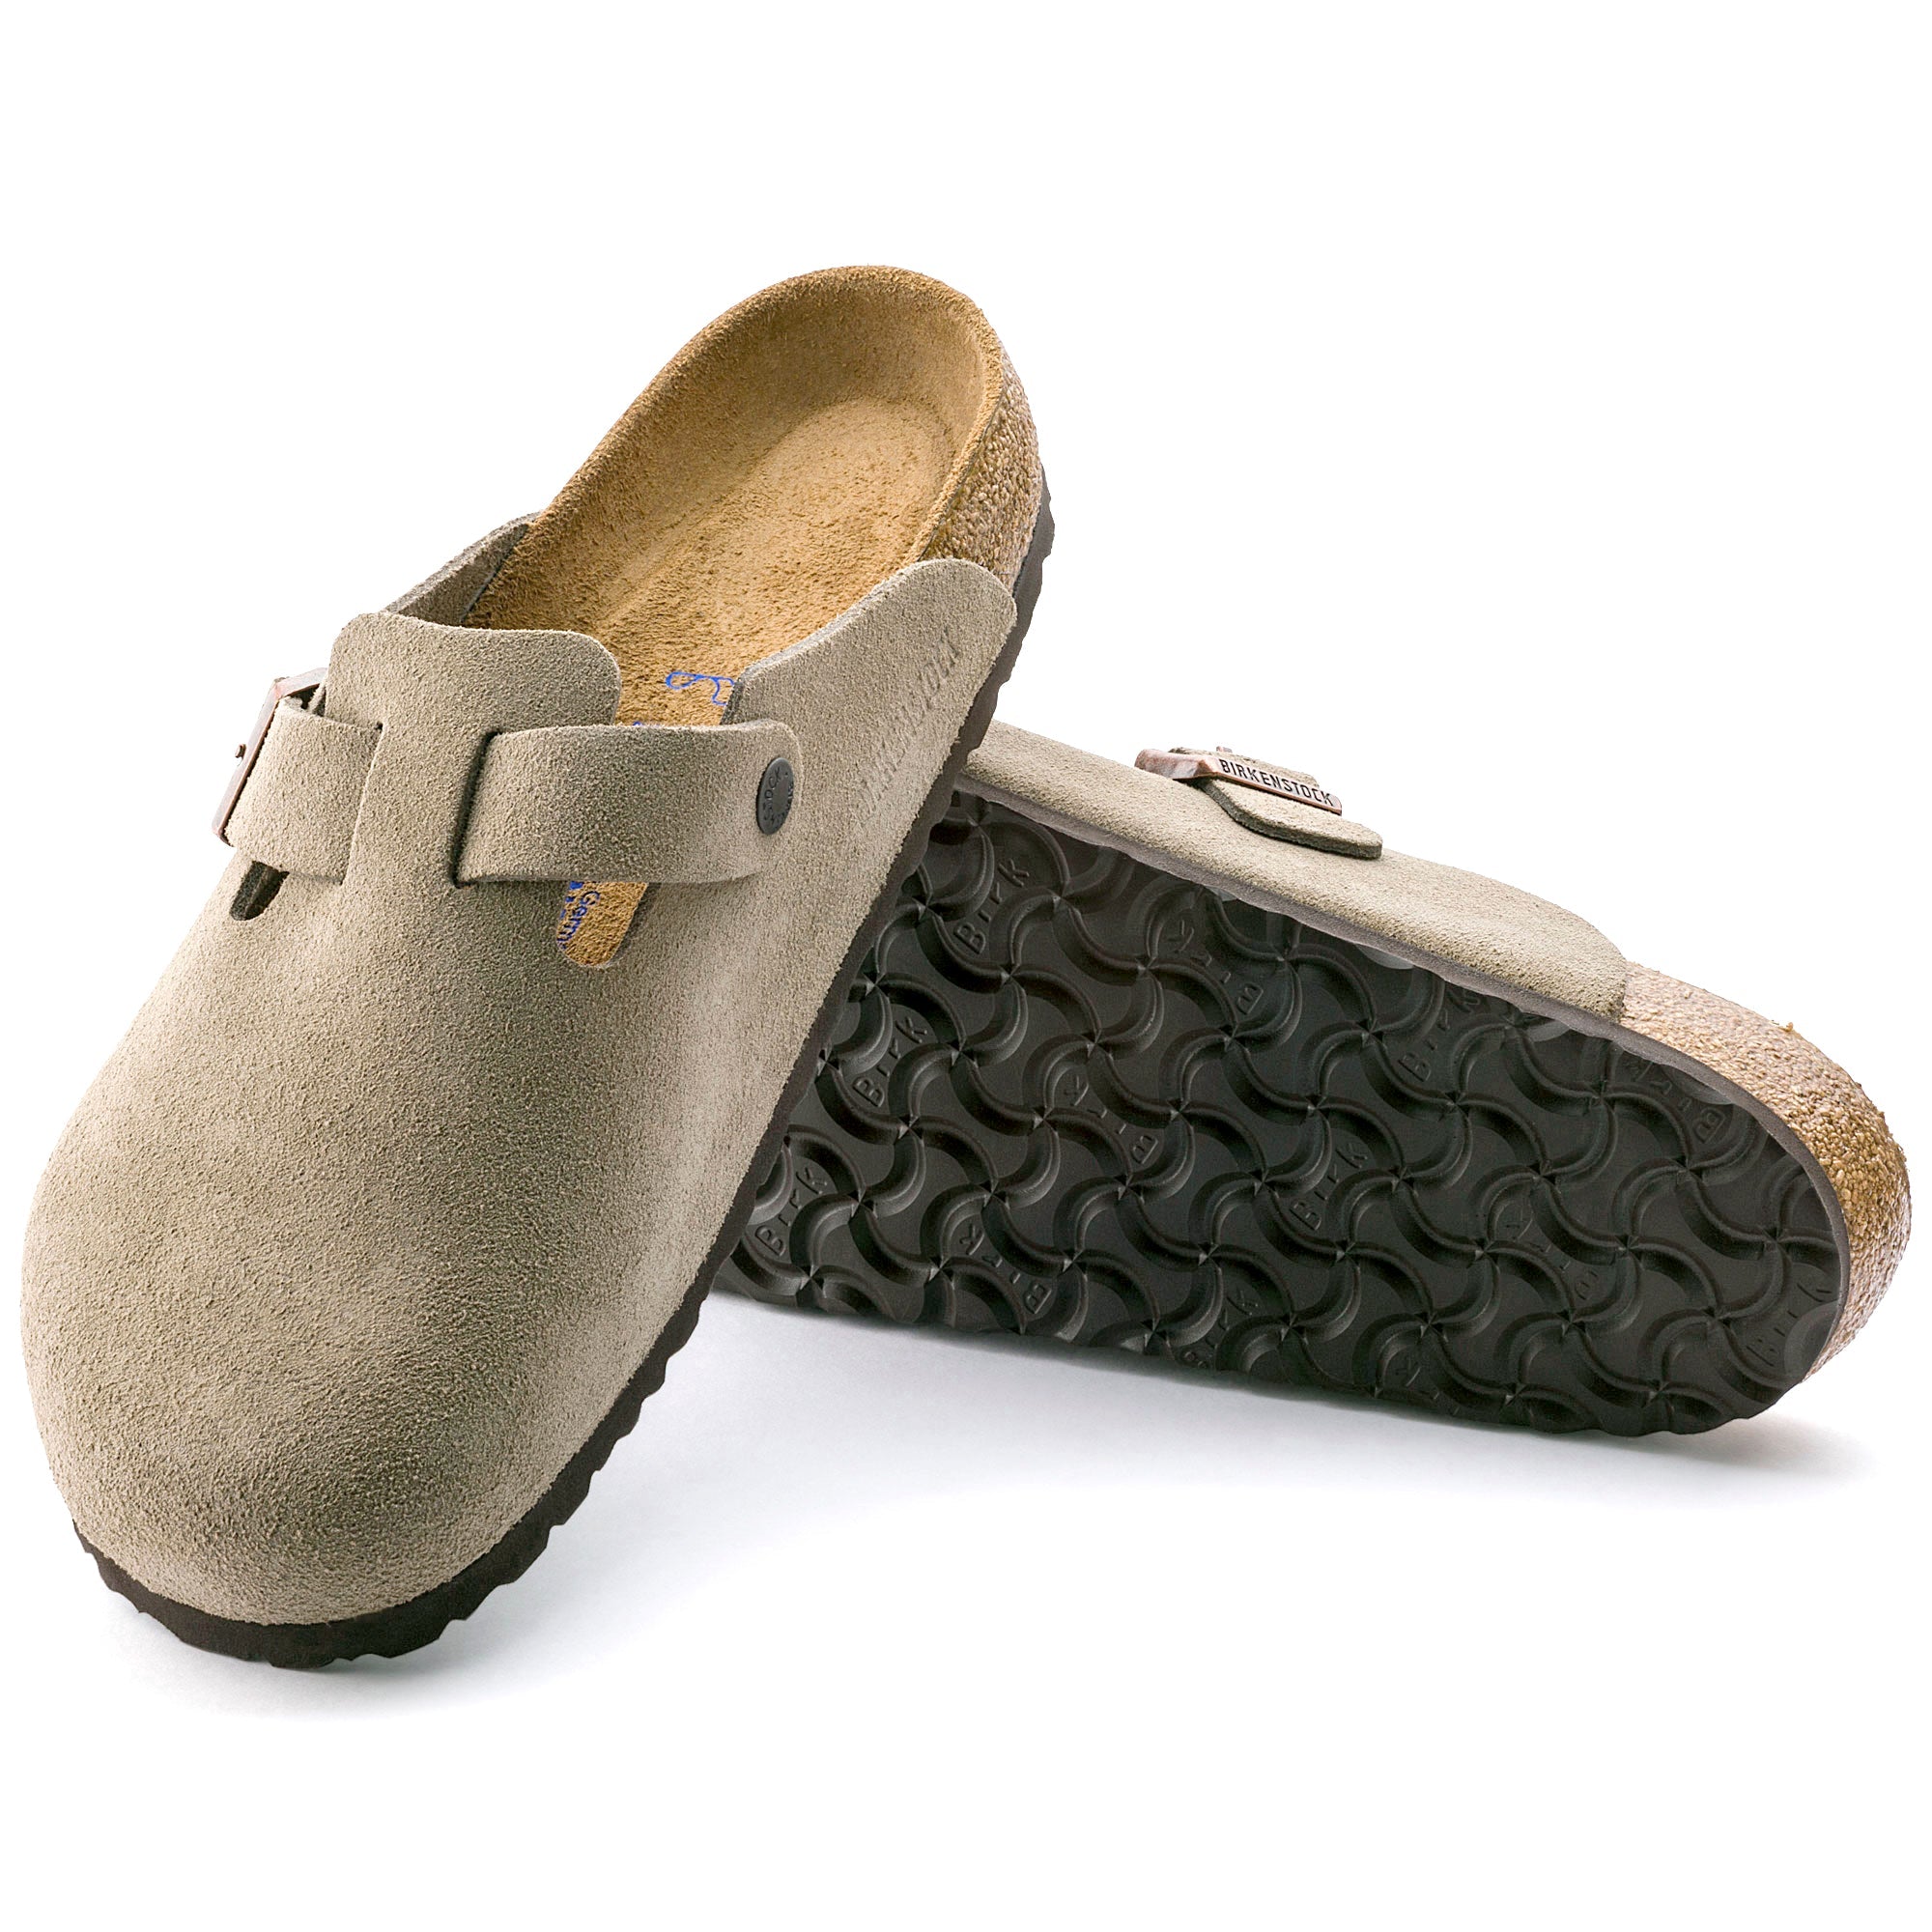 Birkenstock Boston Soft Footbed Suede Leather Color: Taupe (REGULAR/WIDE WIDTH) 1